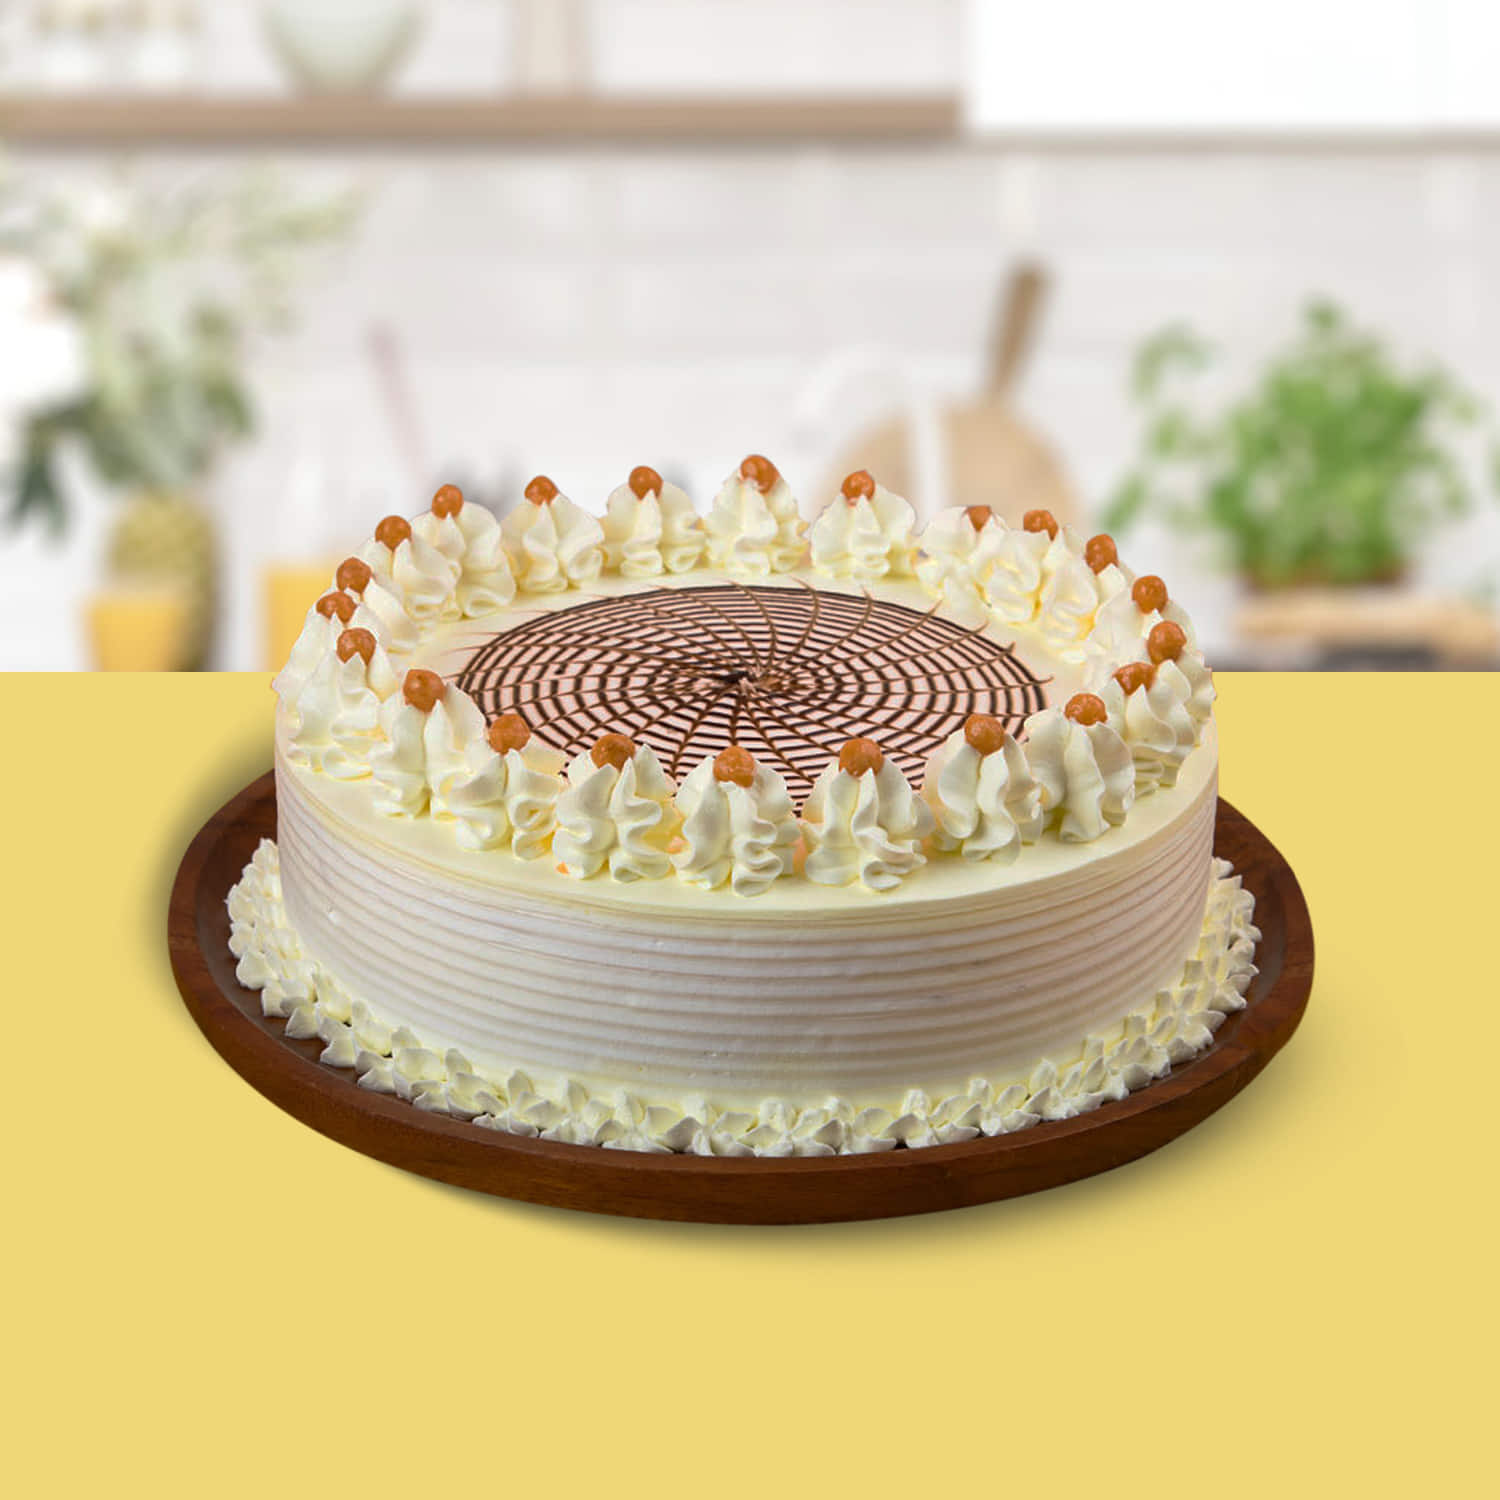 Top 5 Whipped Cream Cake Recipes - Whip World Blog – Whip World NZ